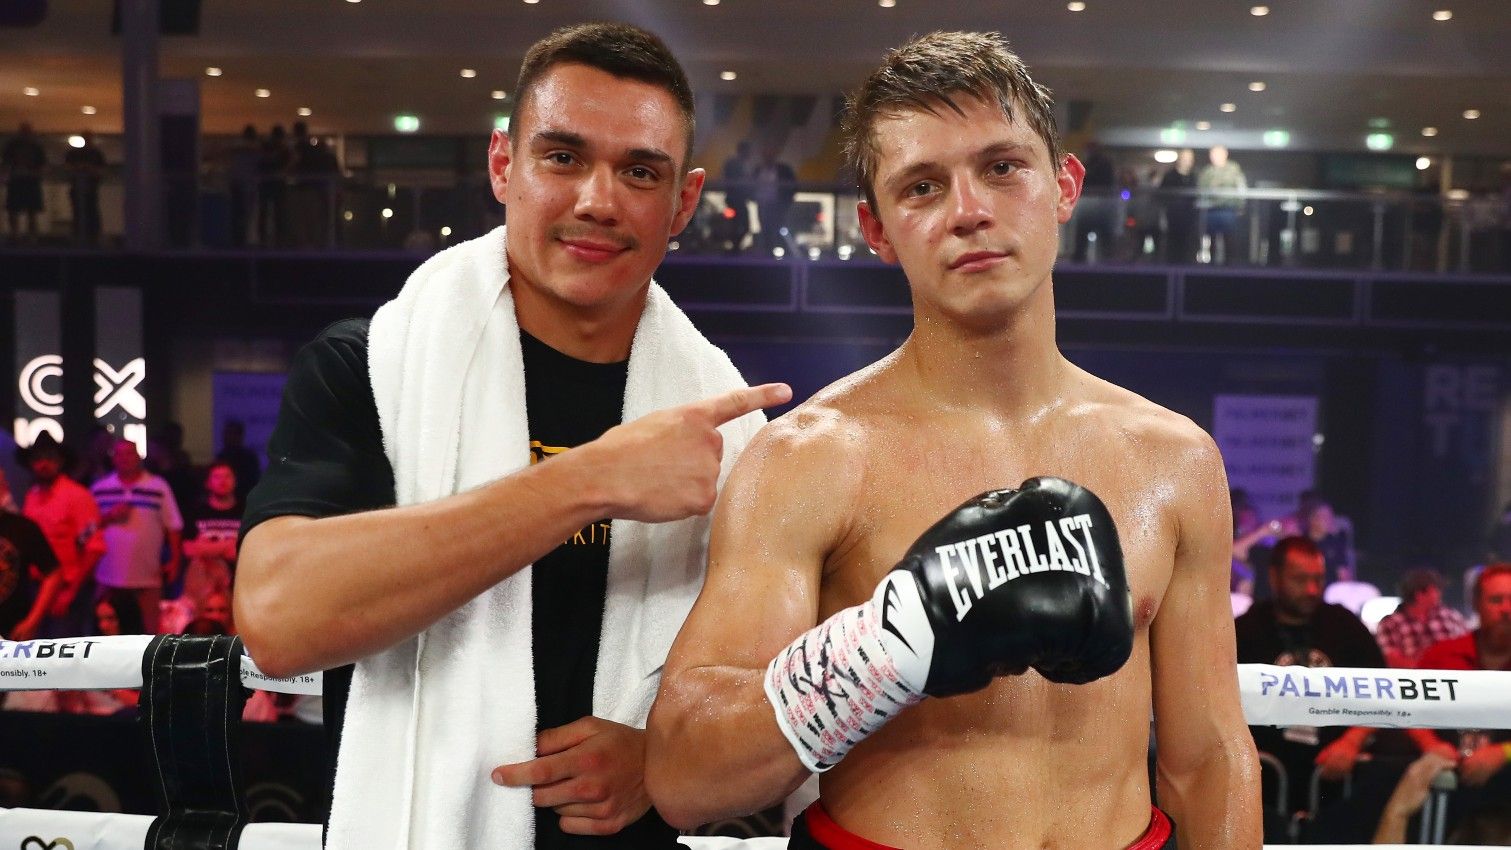 Nikita Tszyu wins impressive pro boxing debut